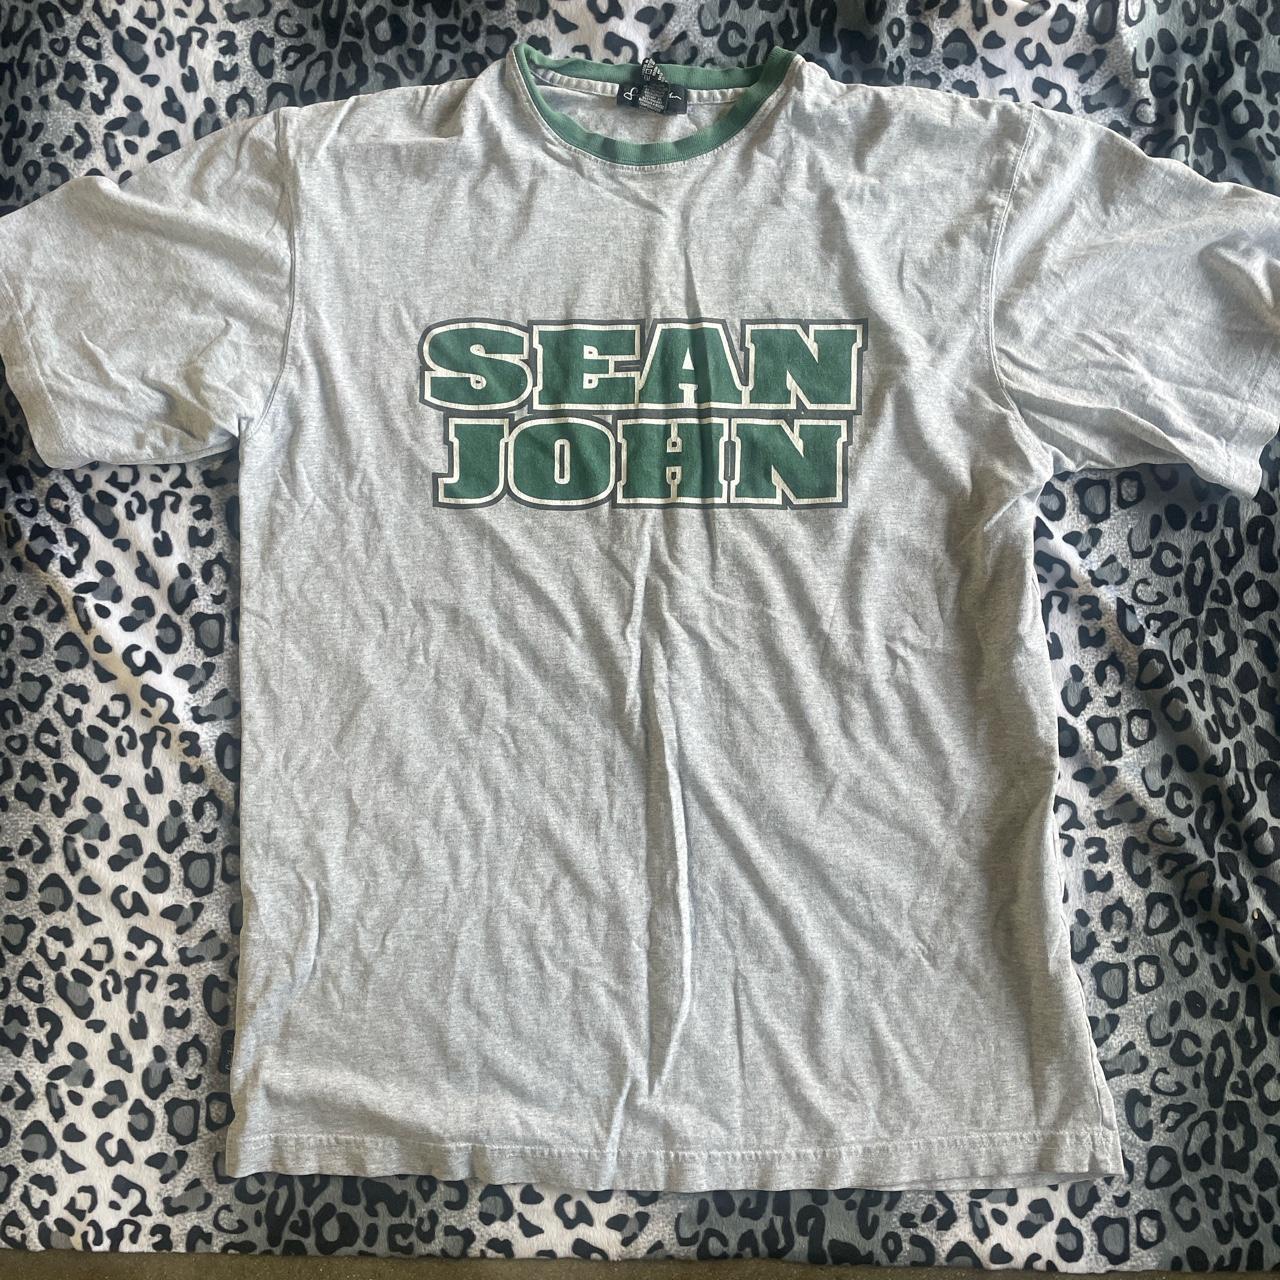 Sean John Men's Green and Grey T-shirt